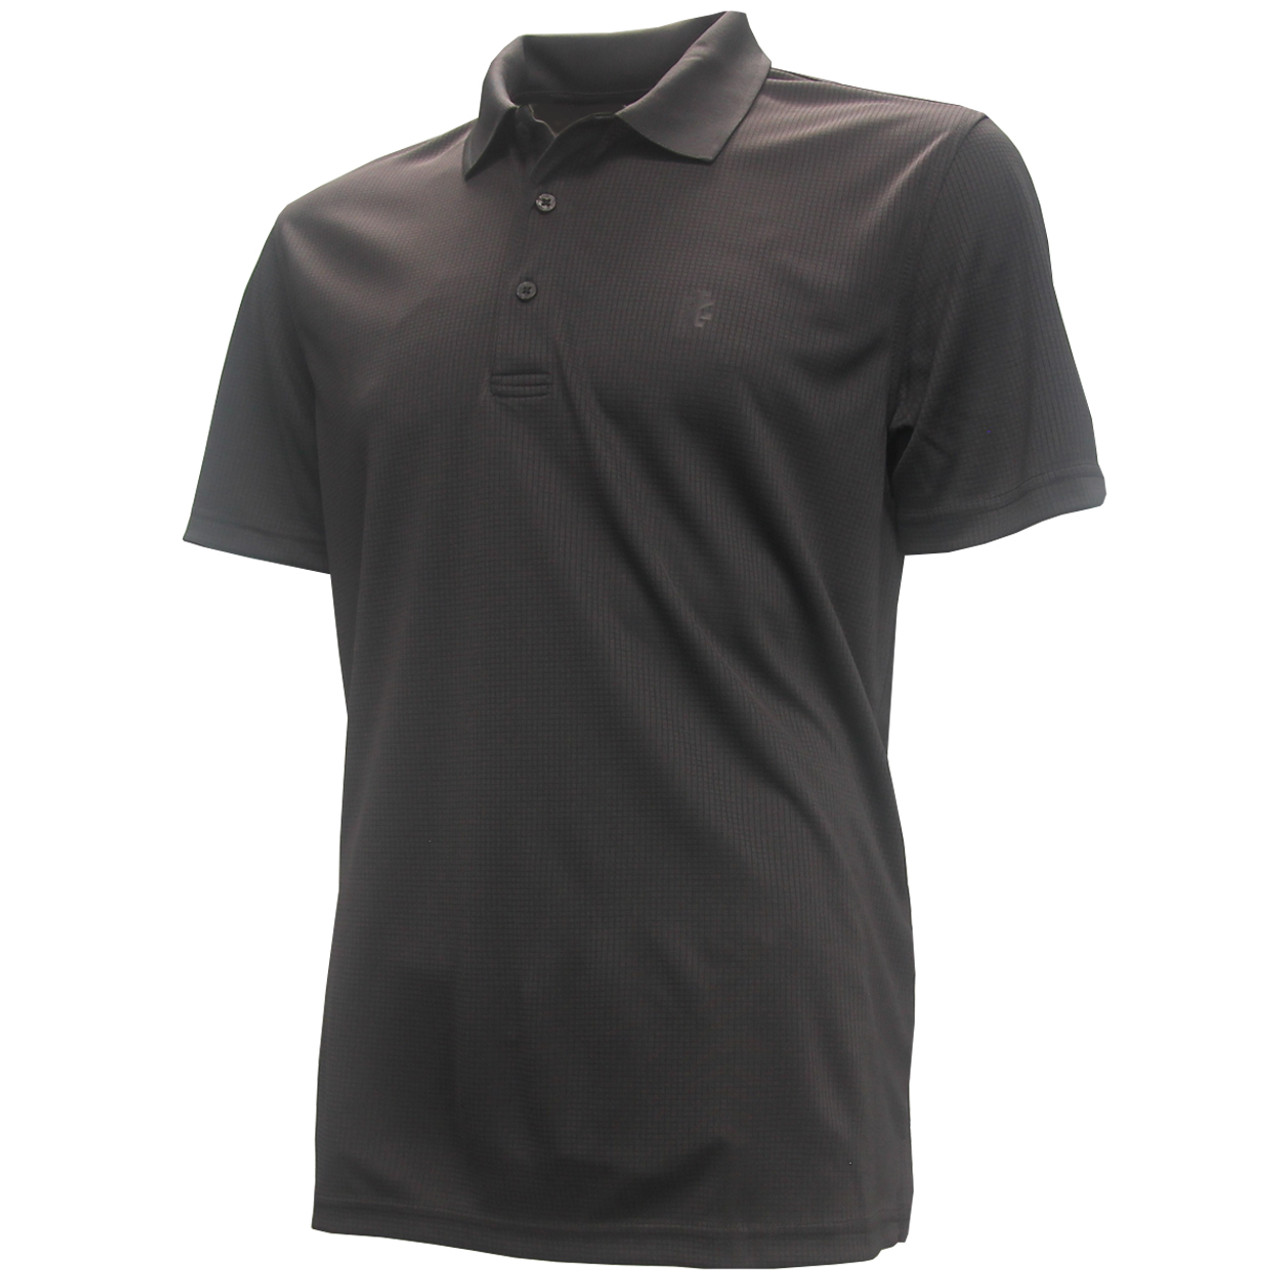 IZOD Golf Performance Grid Knit Polo Shirt - GolfEtail.com